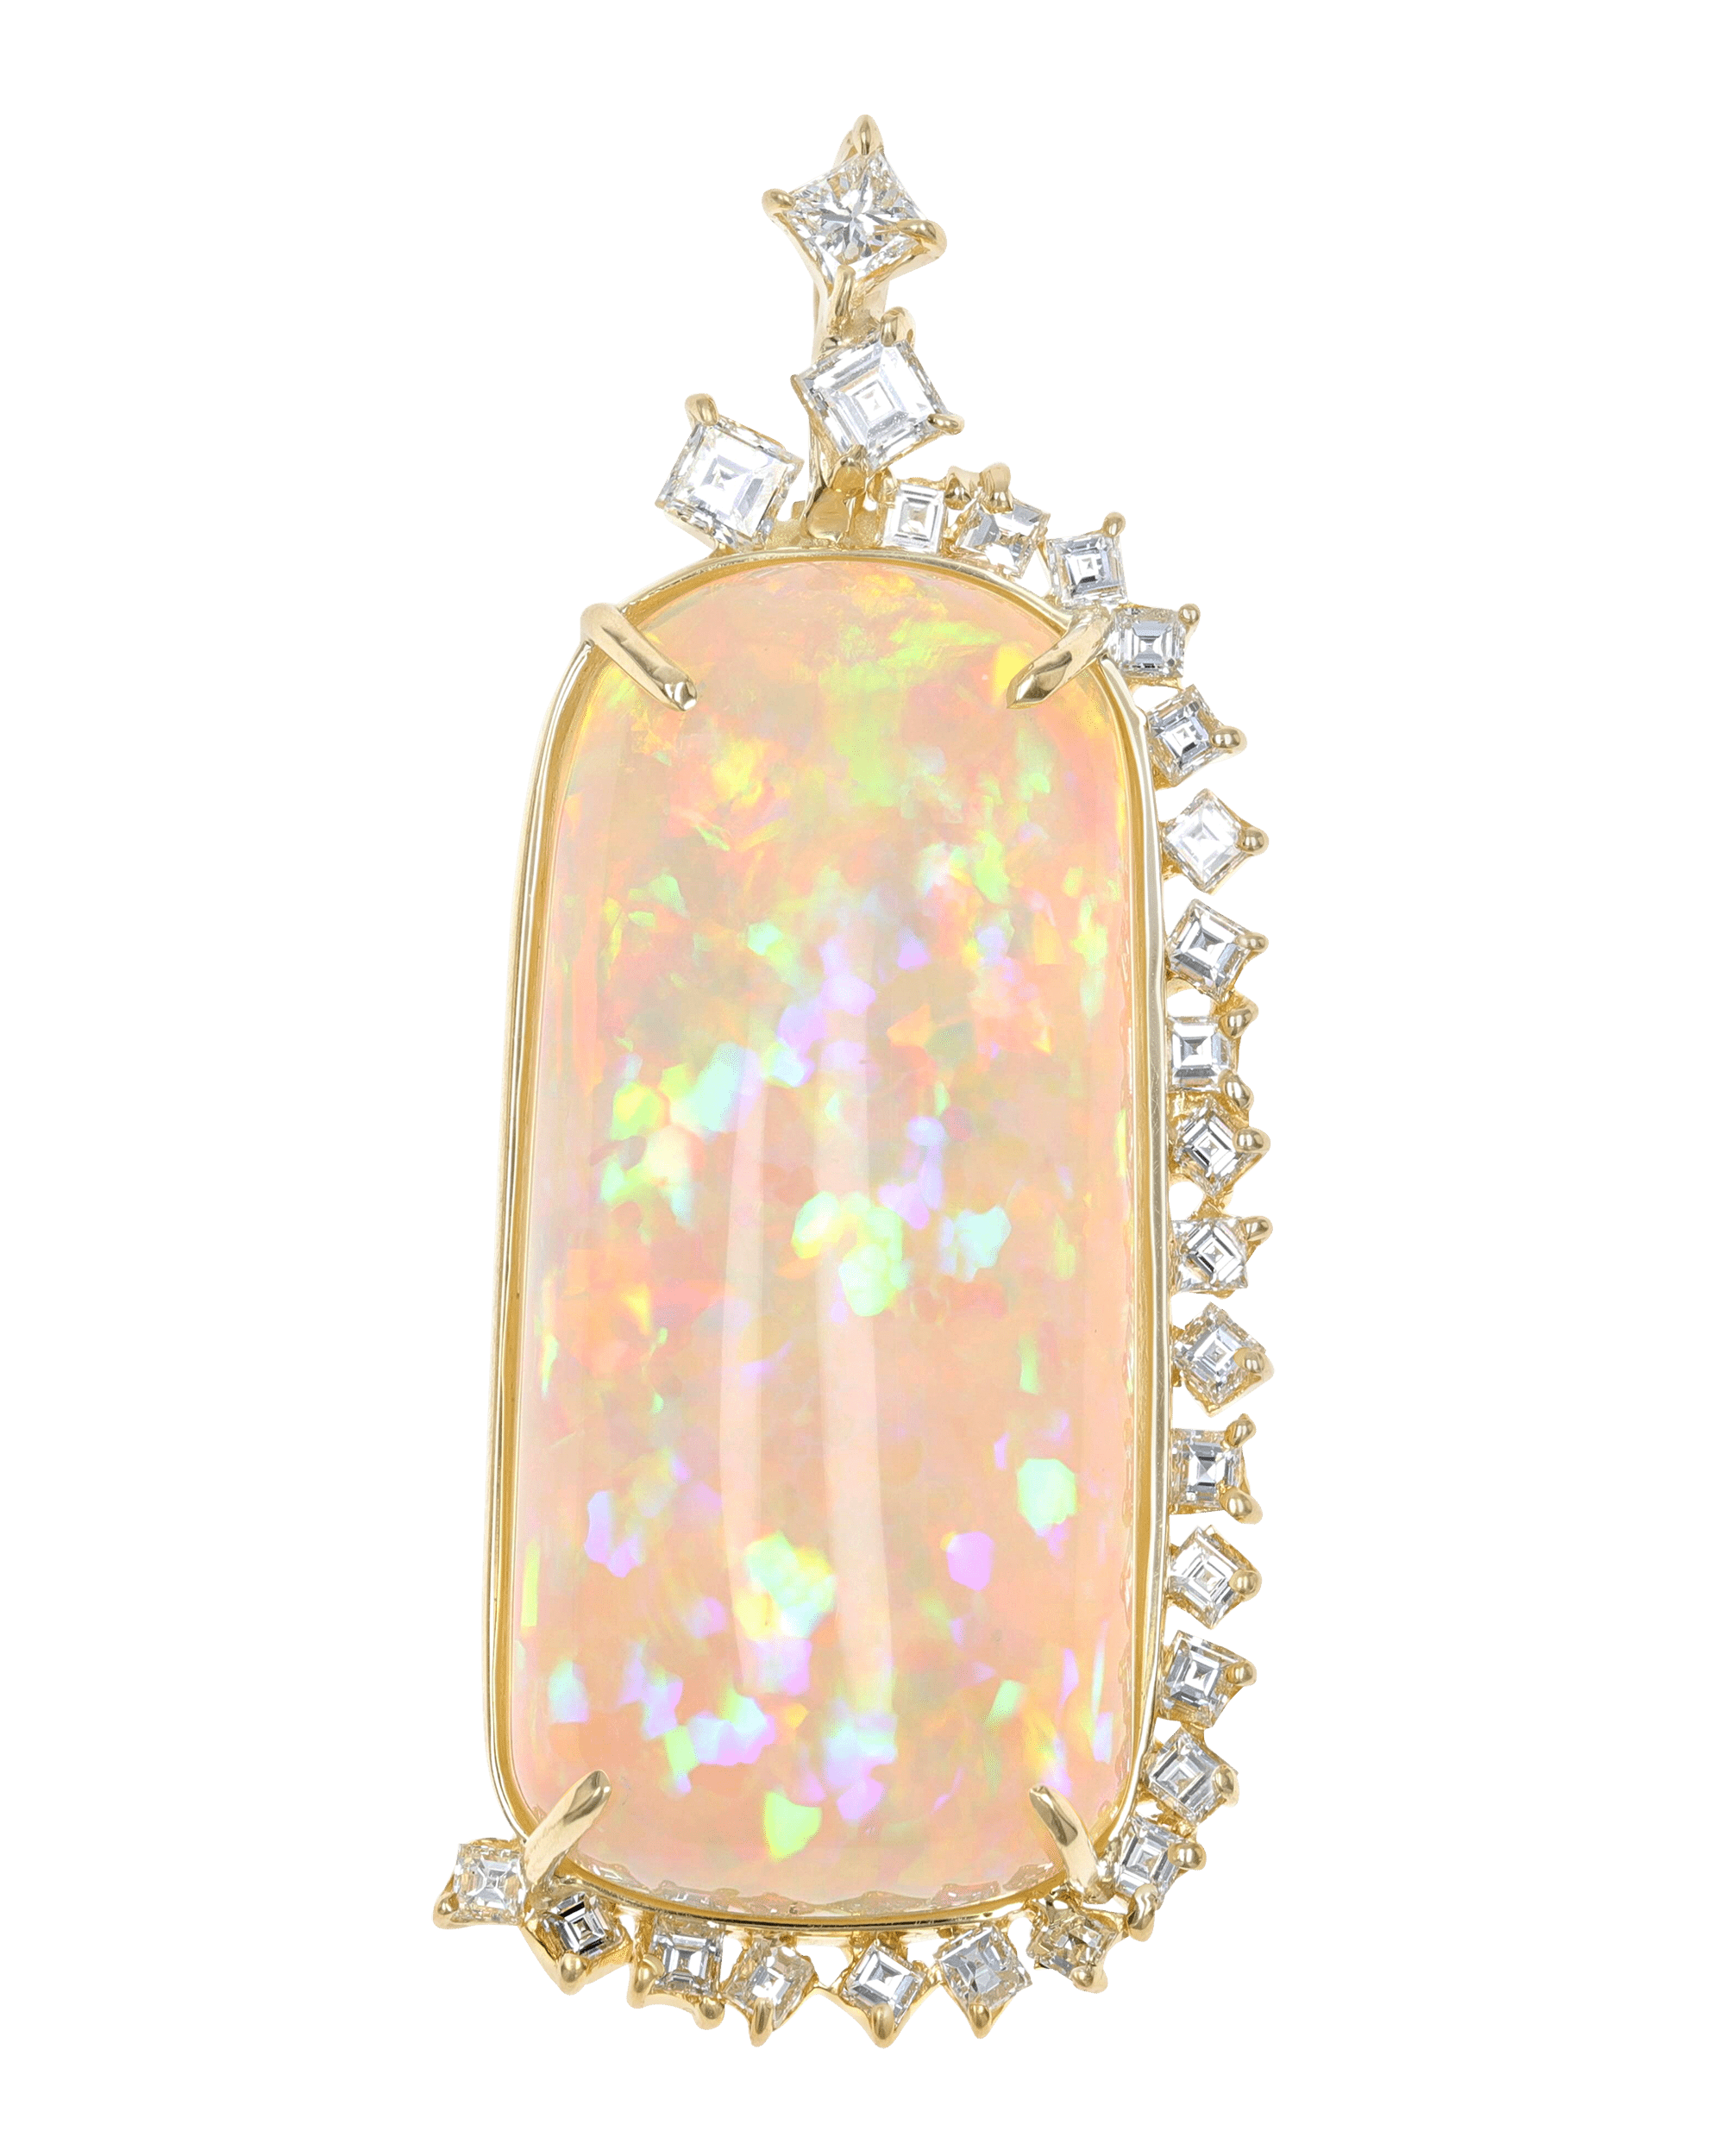 Opal Pendant Necklace in Sterling Silver | Ruby & Oscar